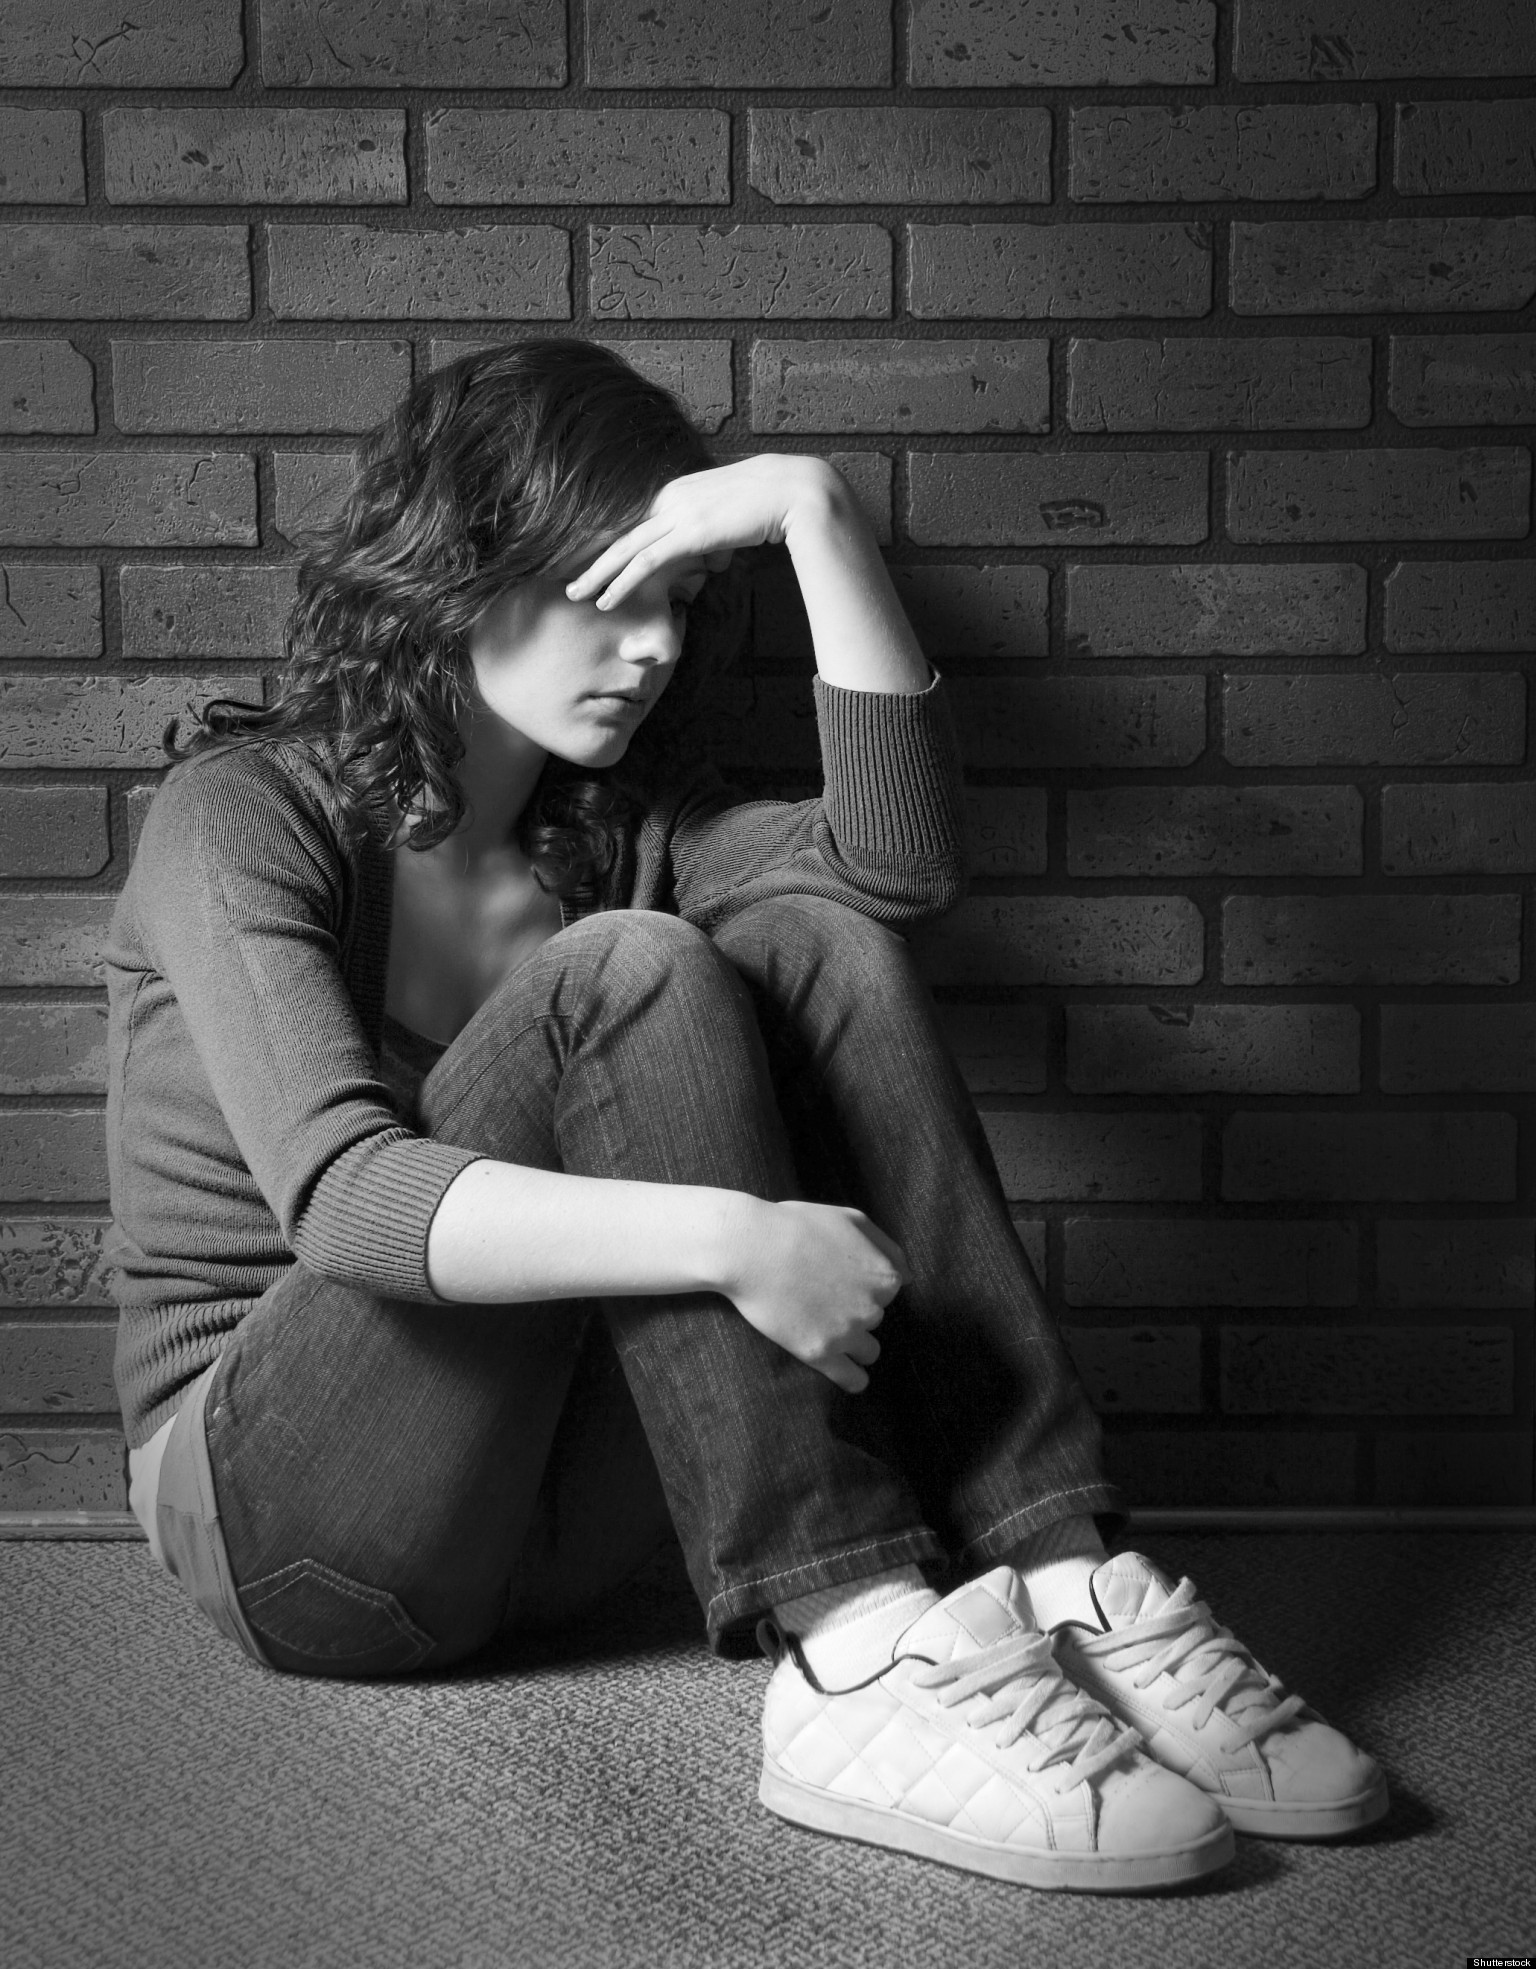 The Problem Of Teen Depression Stigma